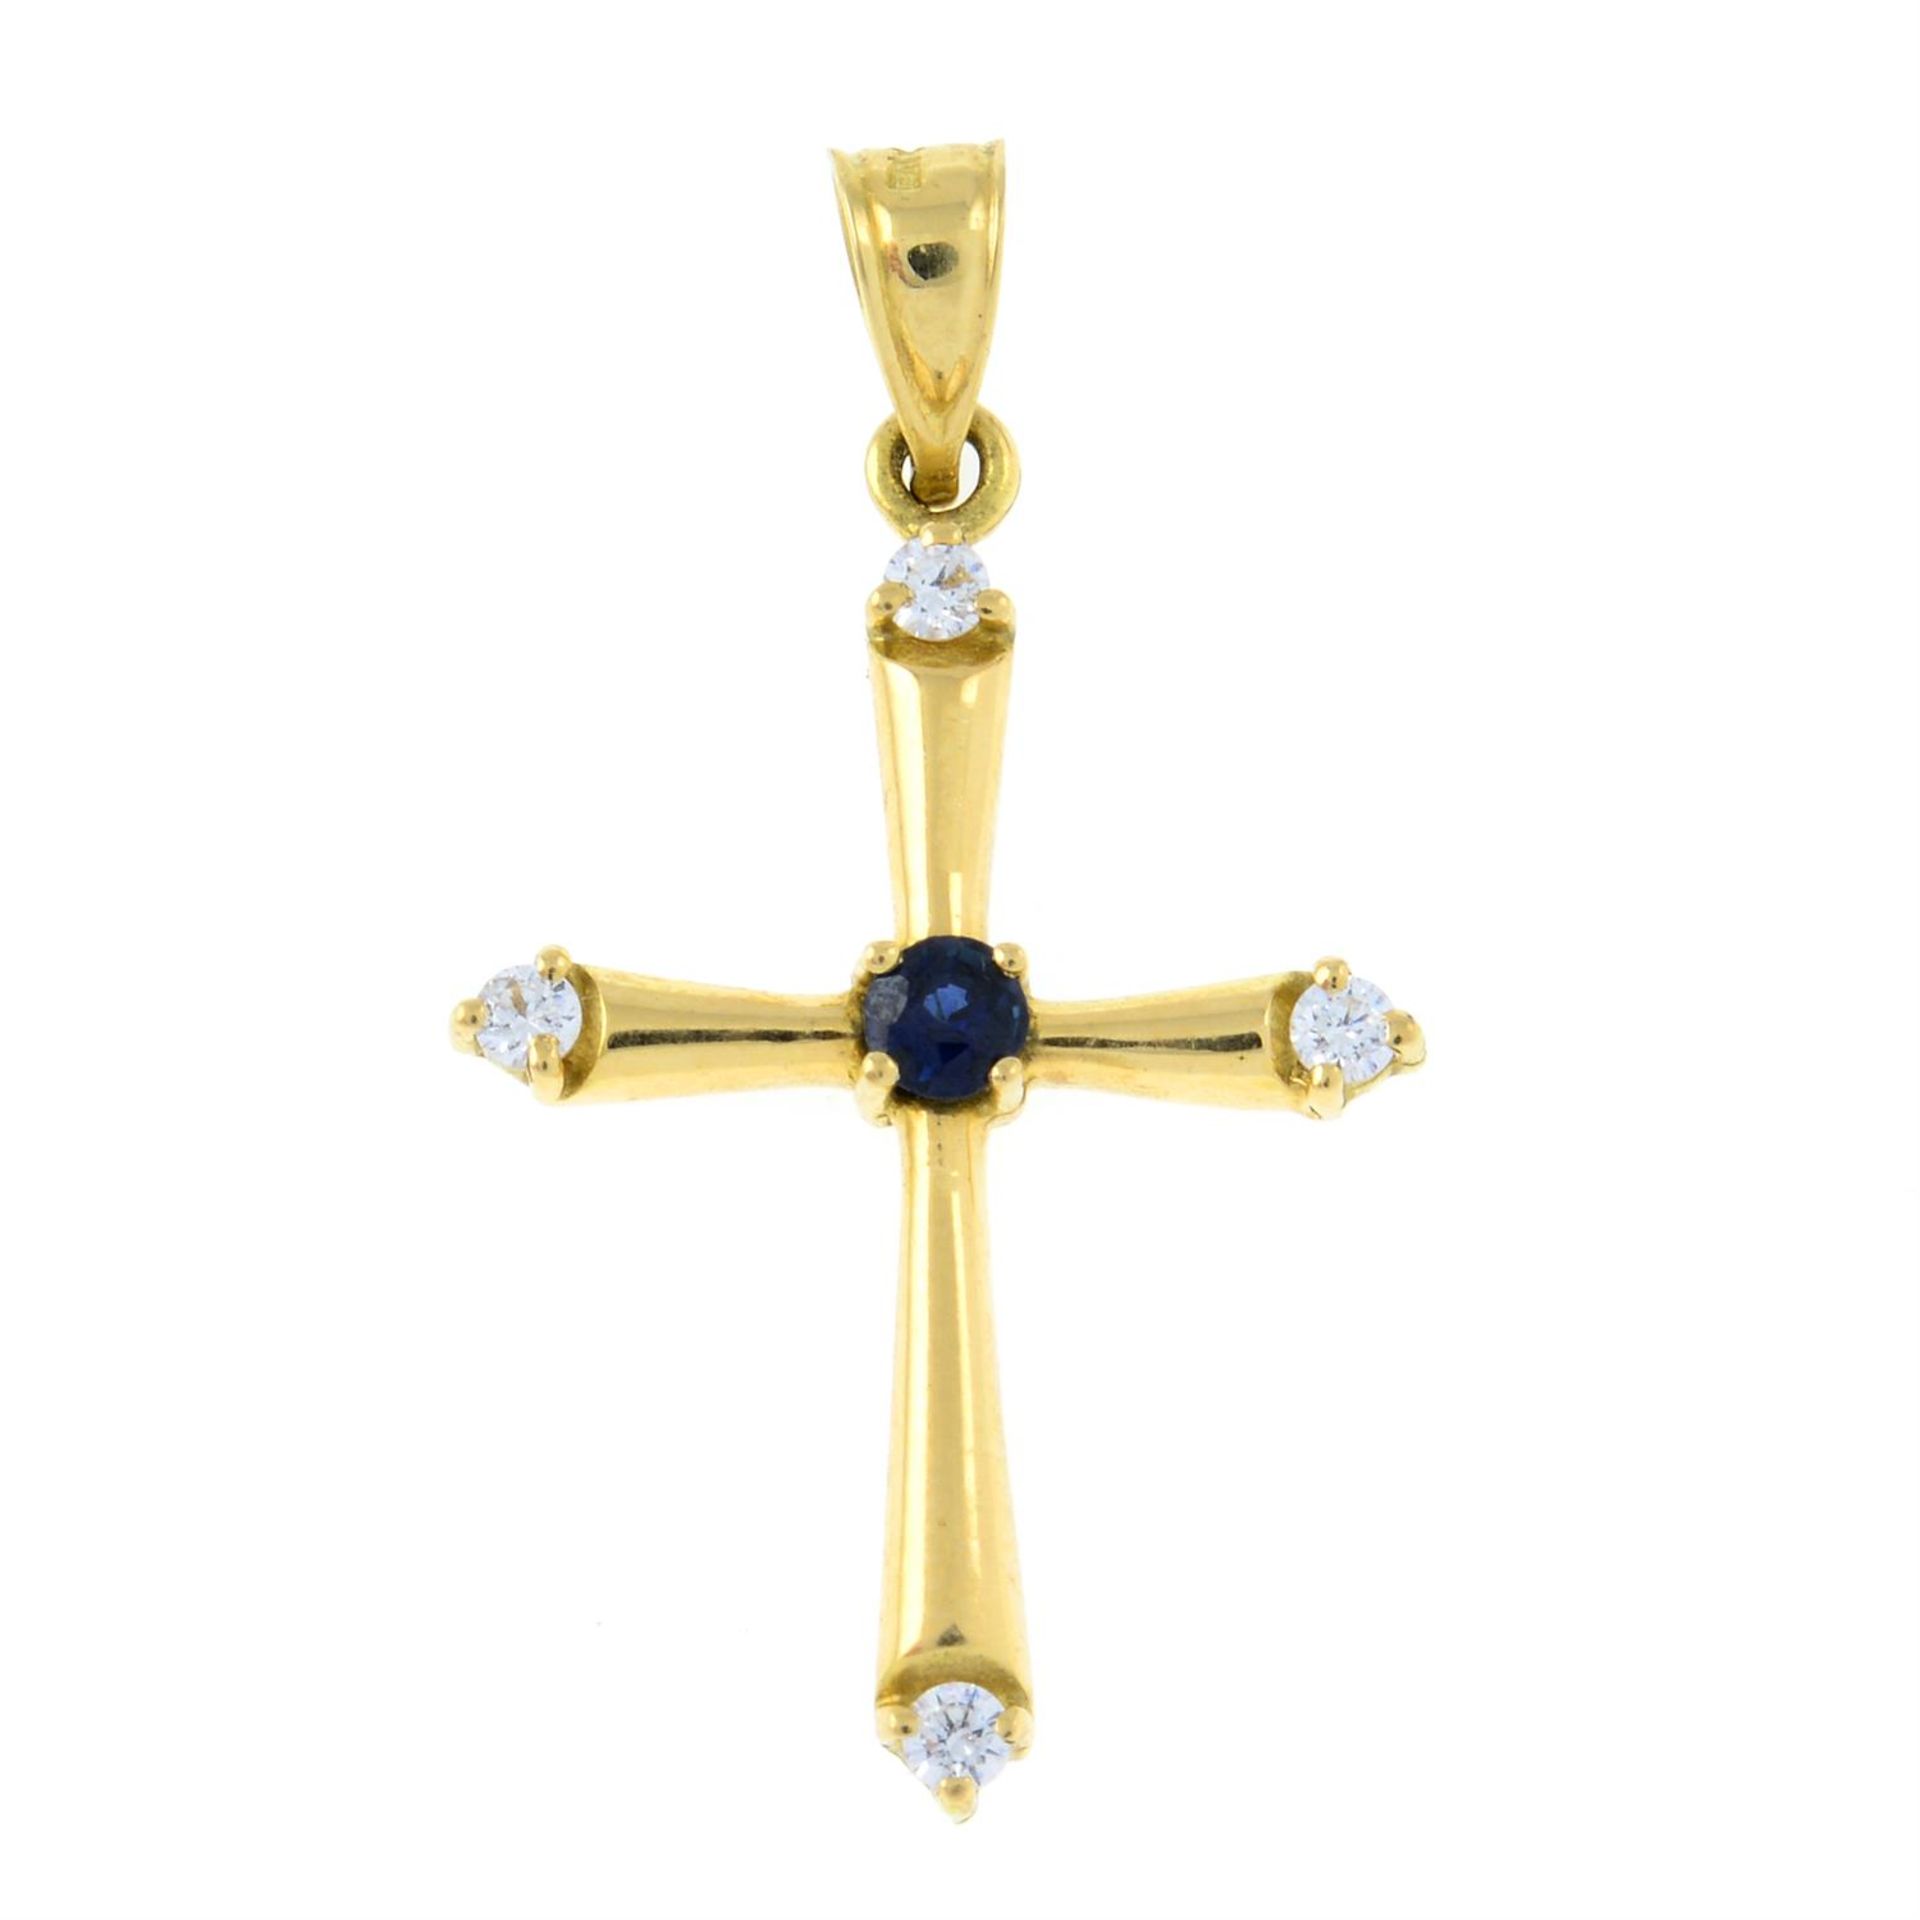 A brilliant-cut diamond and sapphire cross pendant.